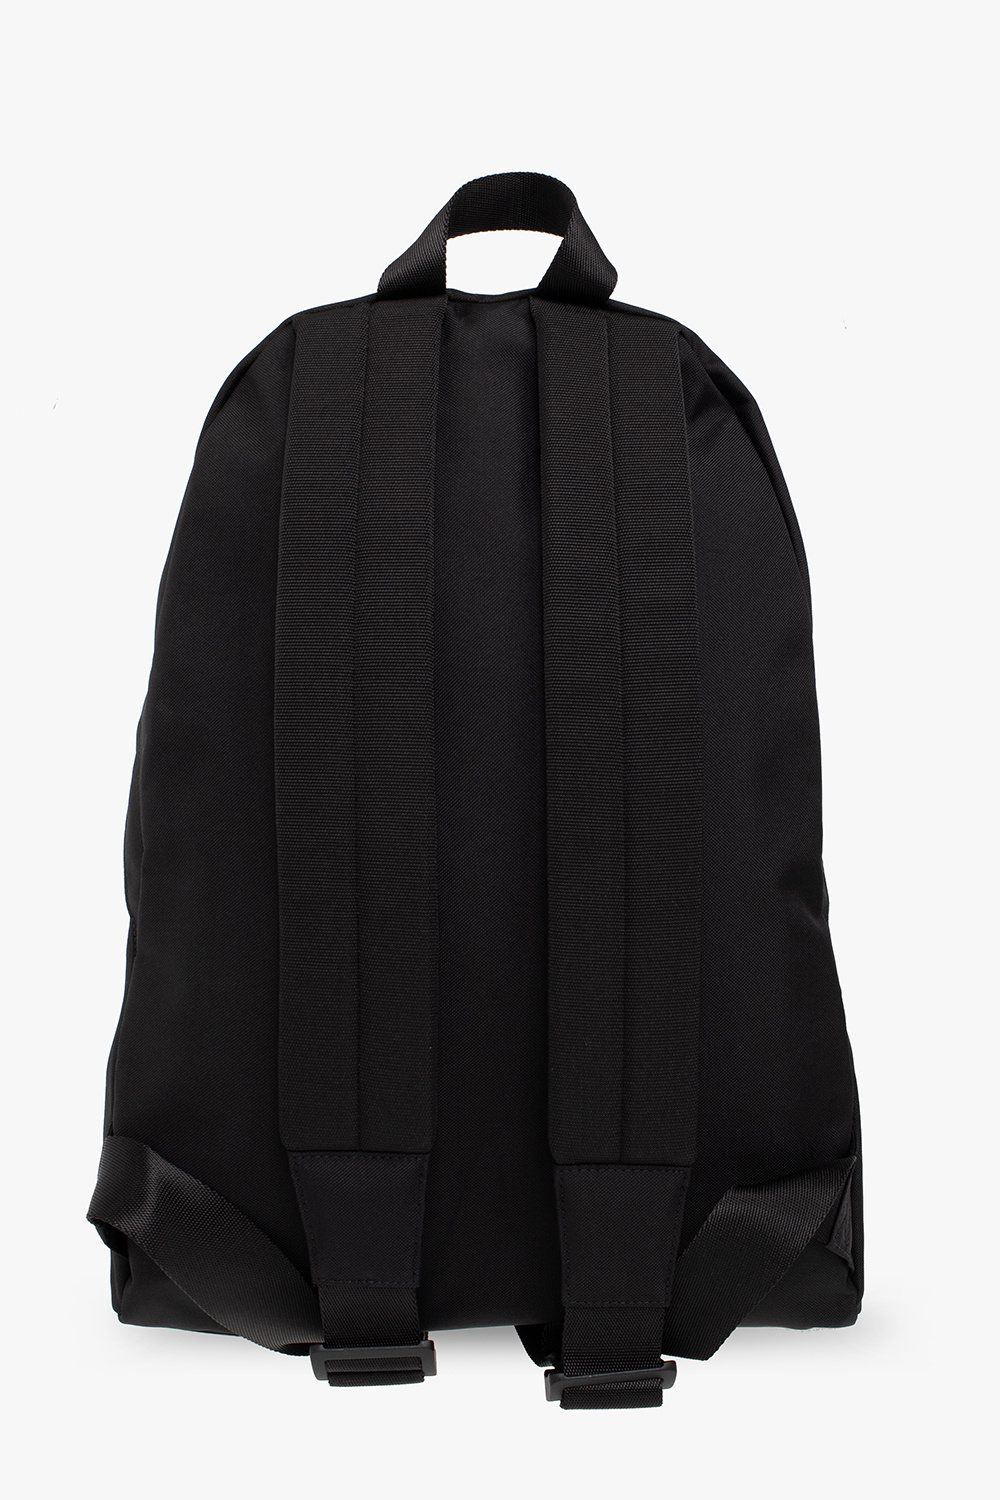 Balenciaga The North Face Borealis backpack in black gray